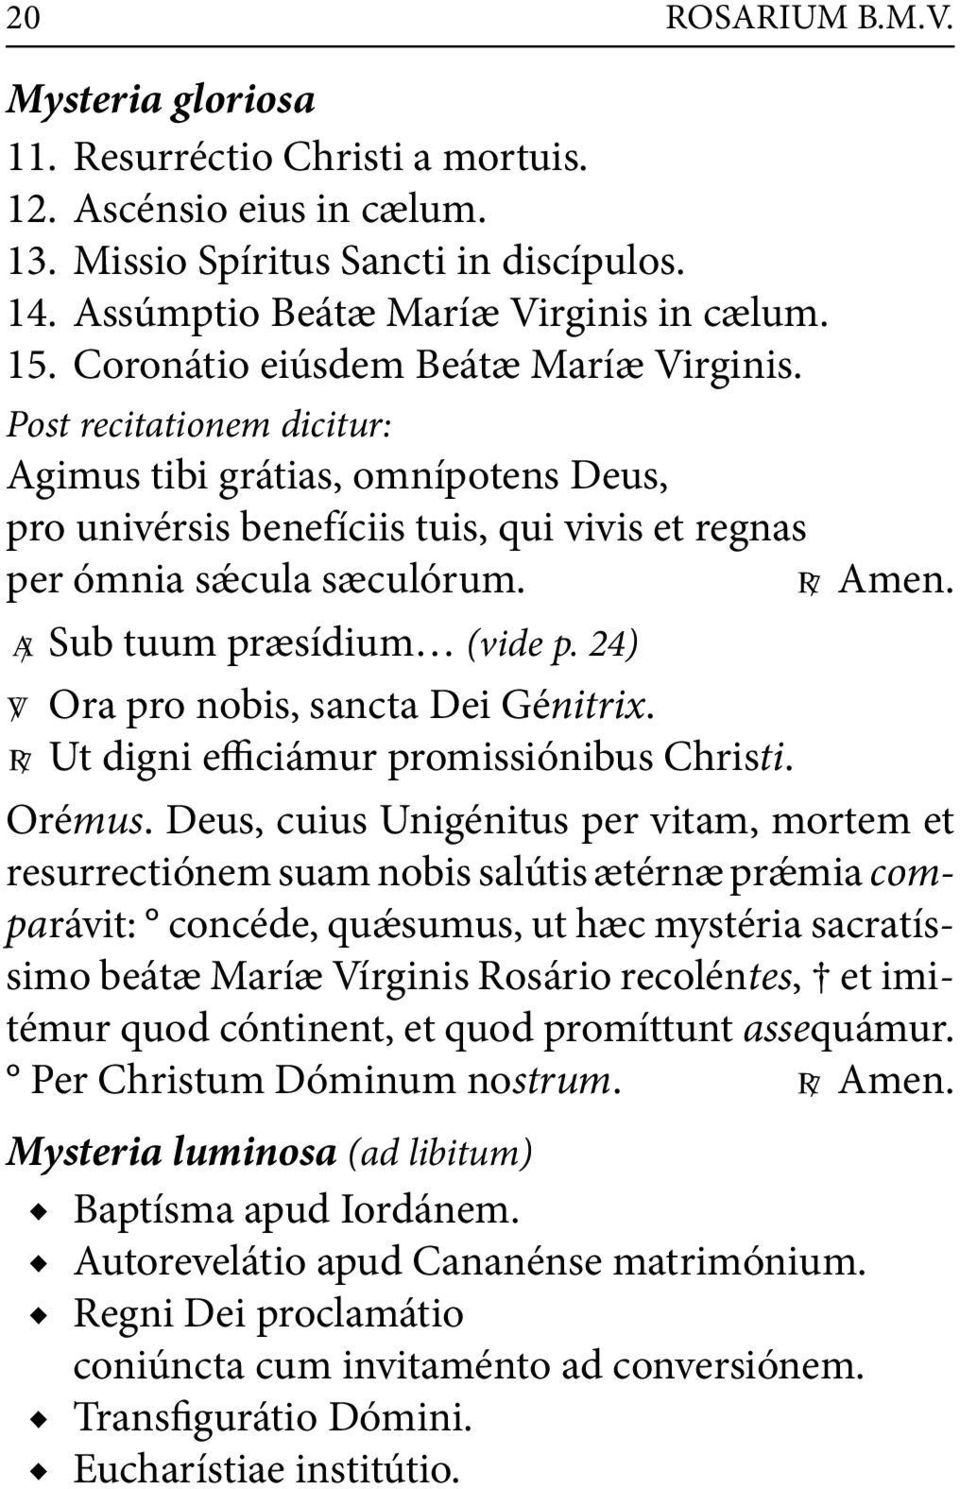 asub tuum præsídium (vide p. 24) vora pro nobis, sancta Dei Génitrix. rut digni efficiámur promissiónibus Christi. Orémus.